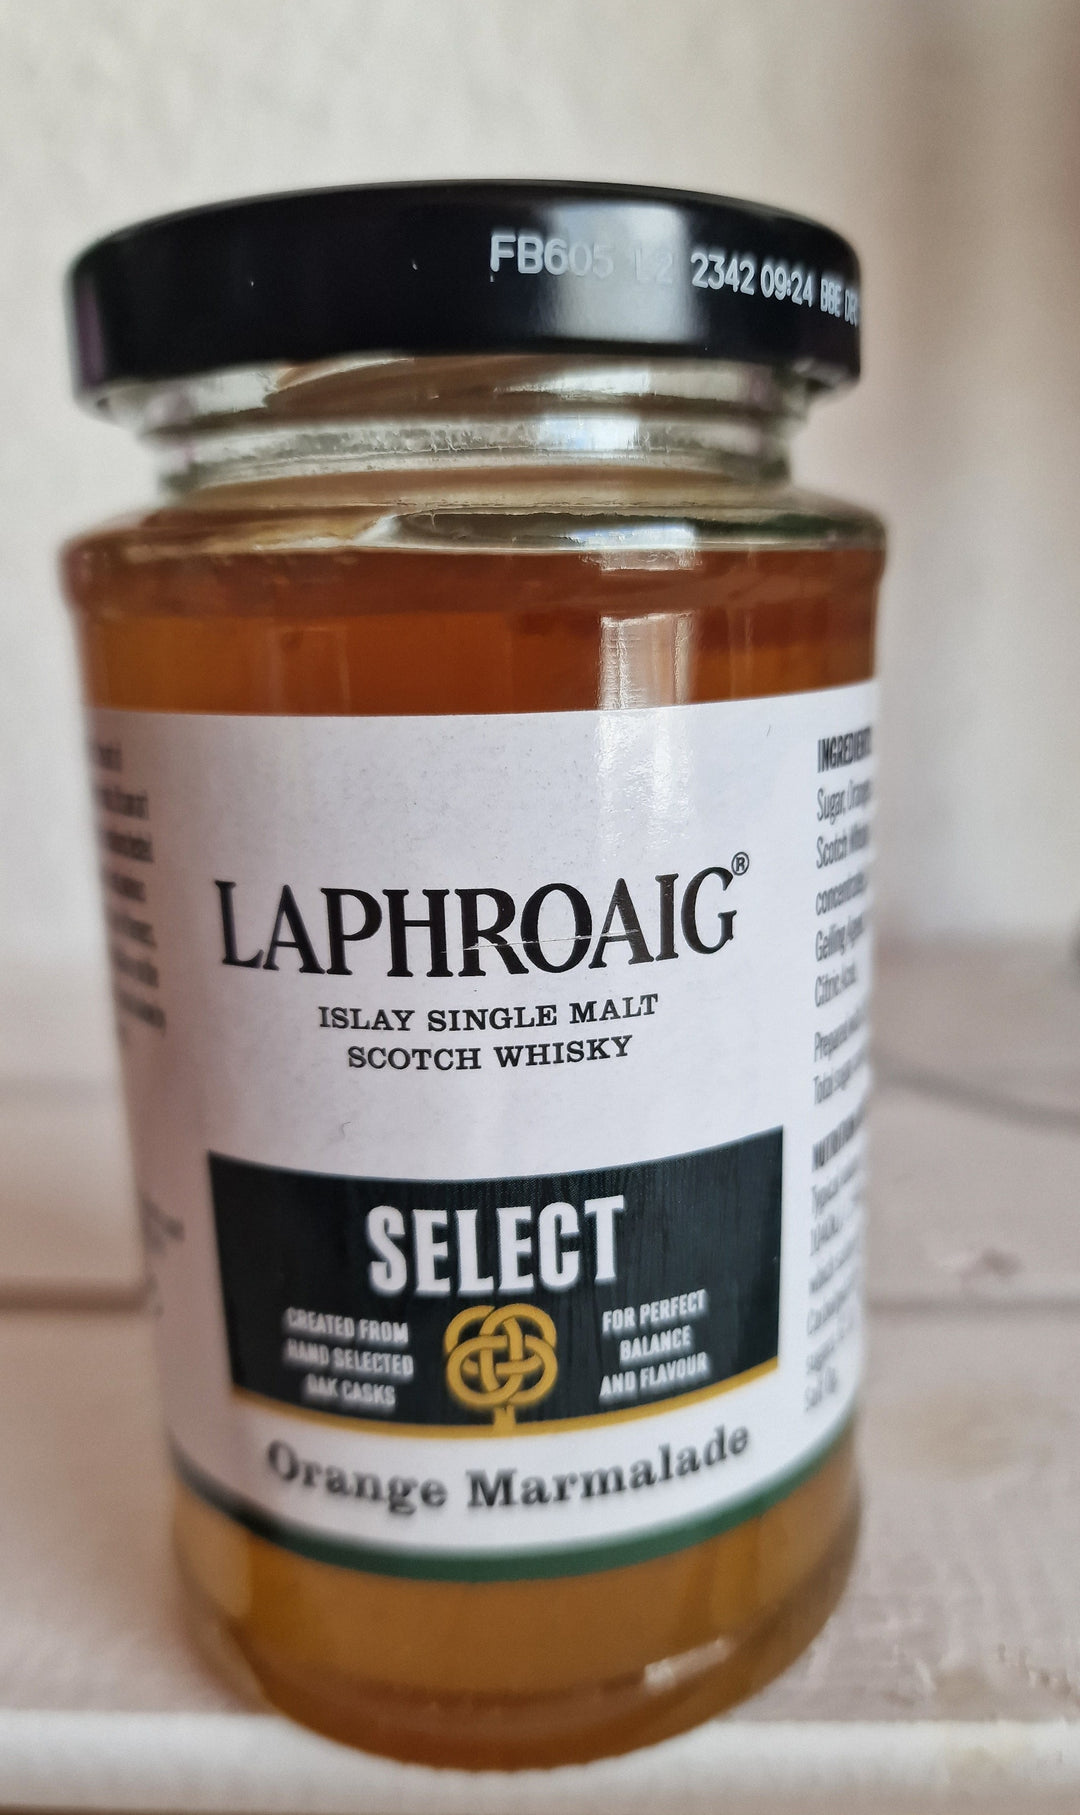 Laphroaig Orange Marmalade  with  Islay Single Malt Scotch Whisky